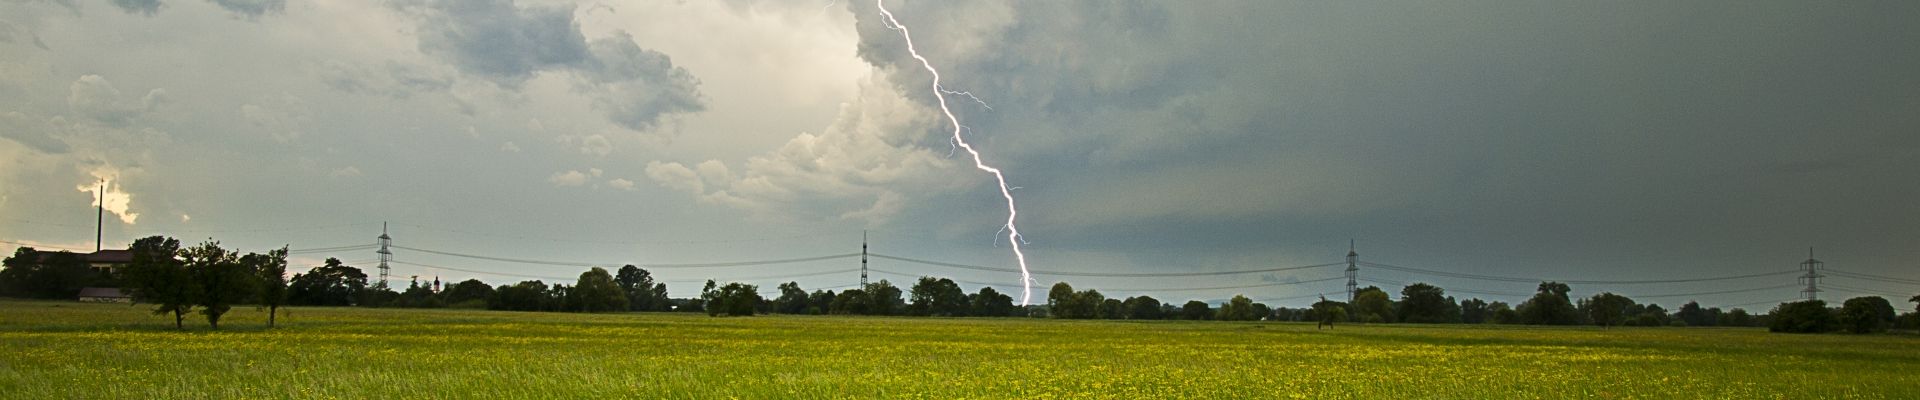 lightning and power line